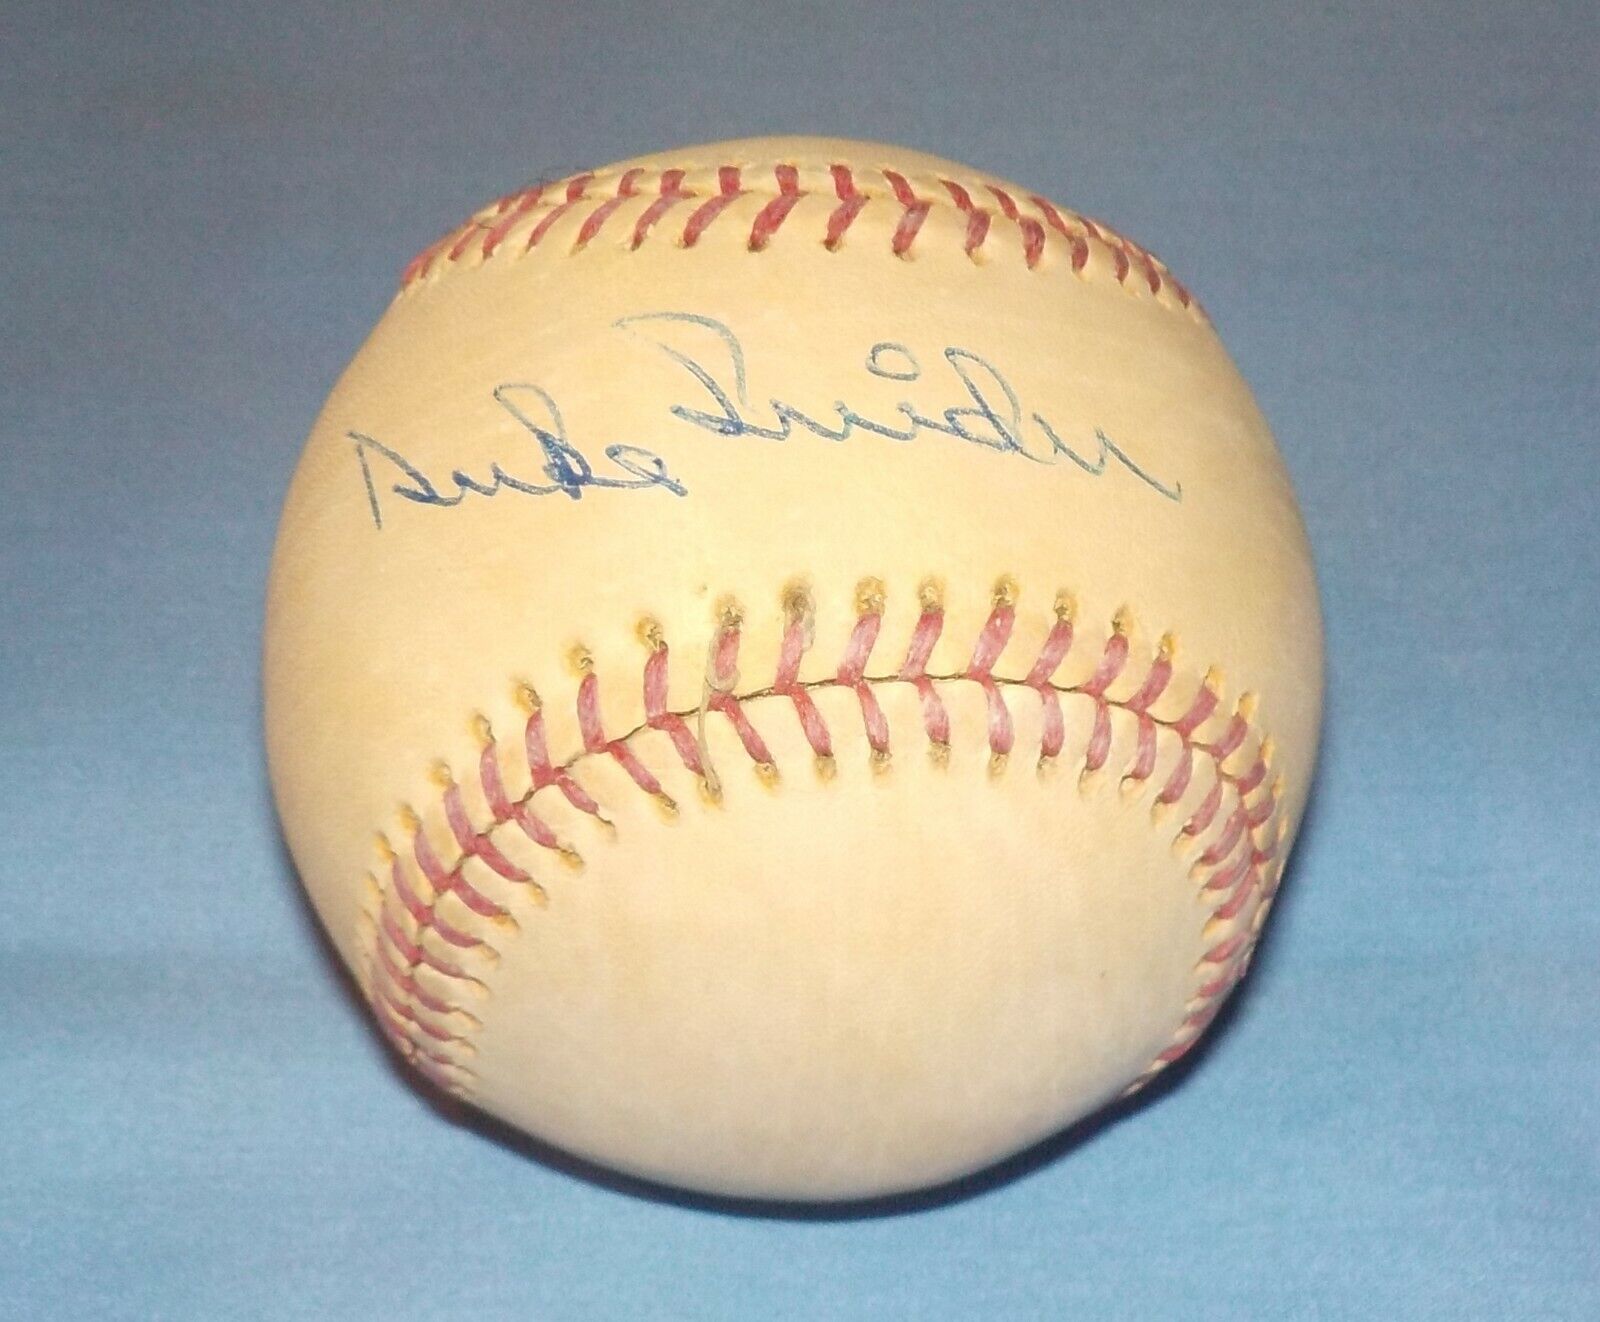 Duke Snider Signed Autographed Baseball Brooklyn Dodgers